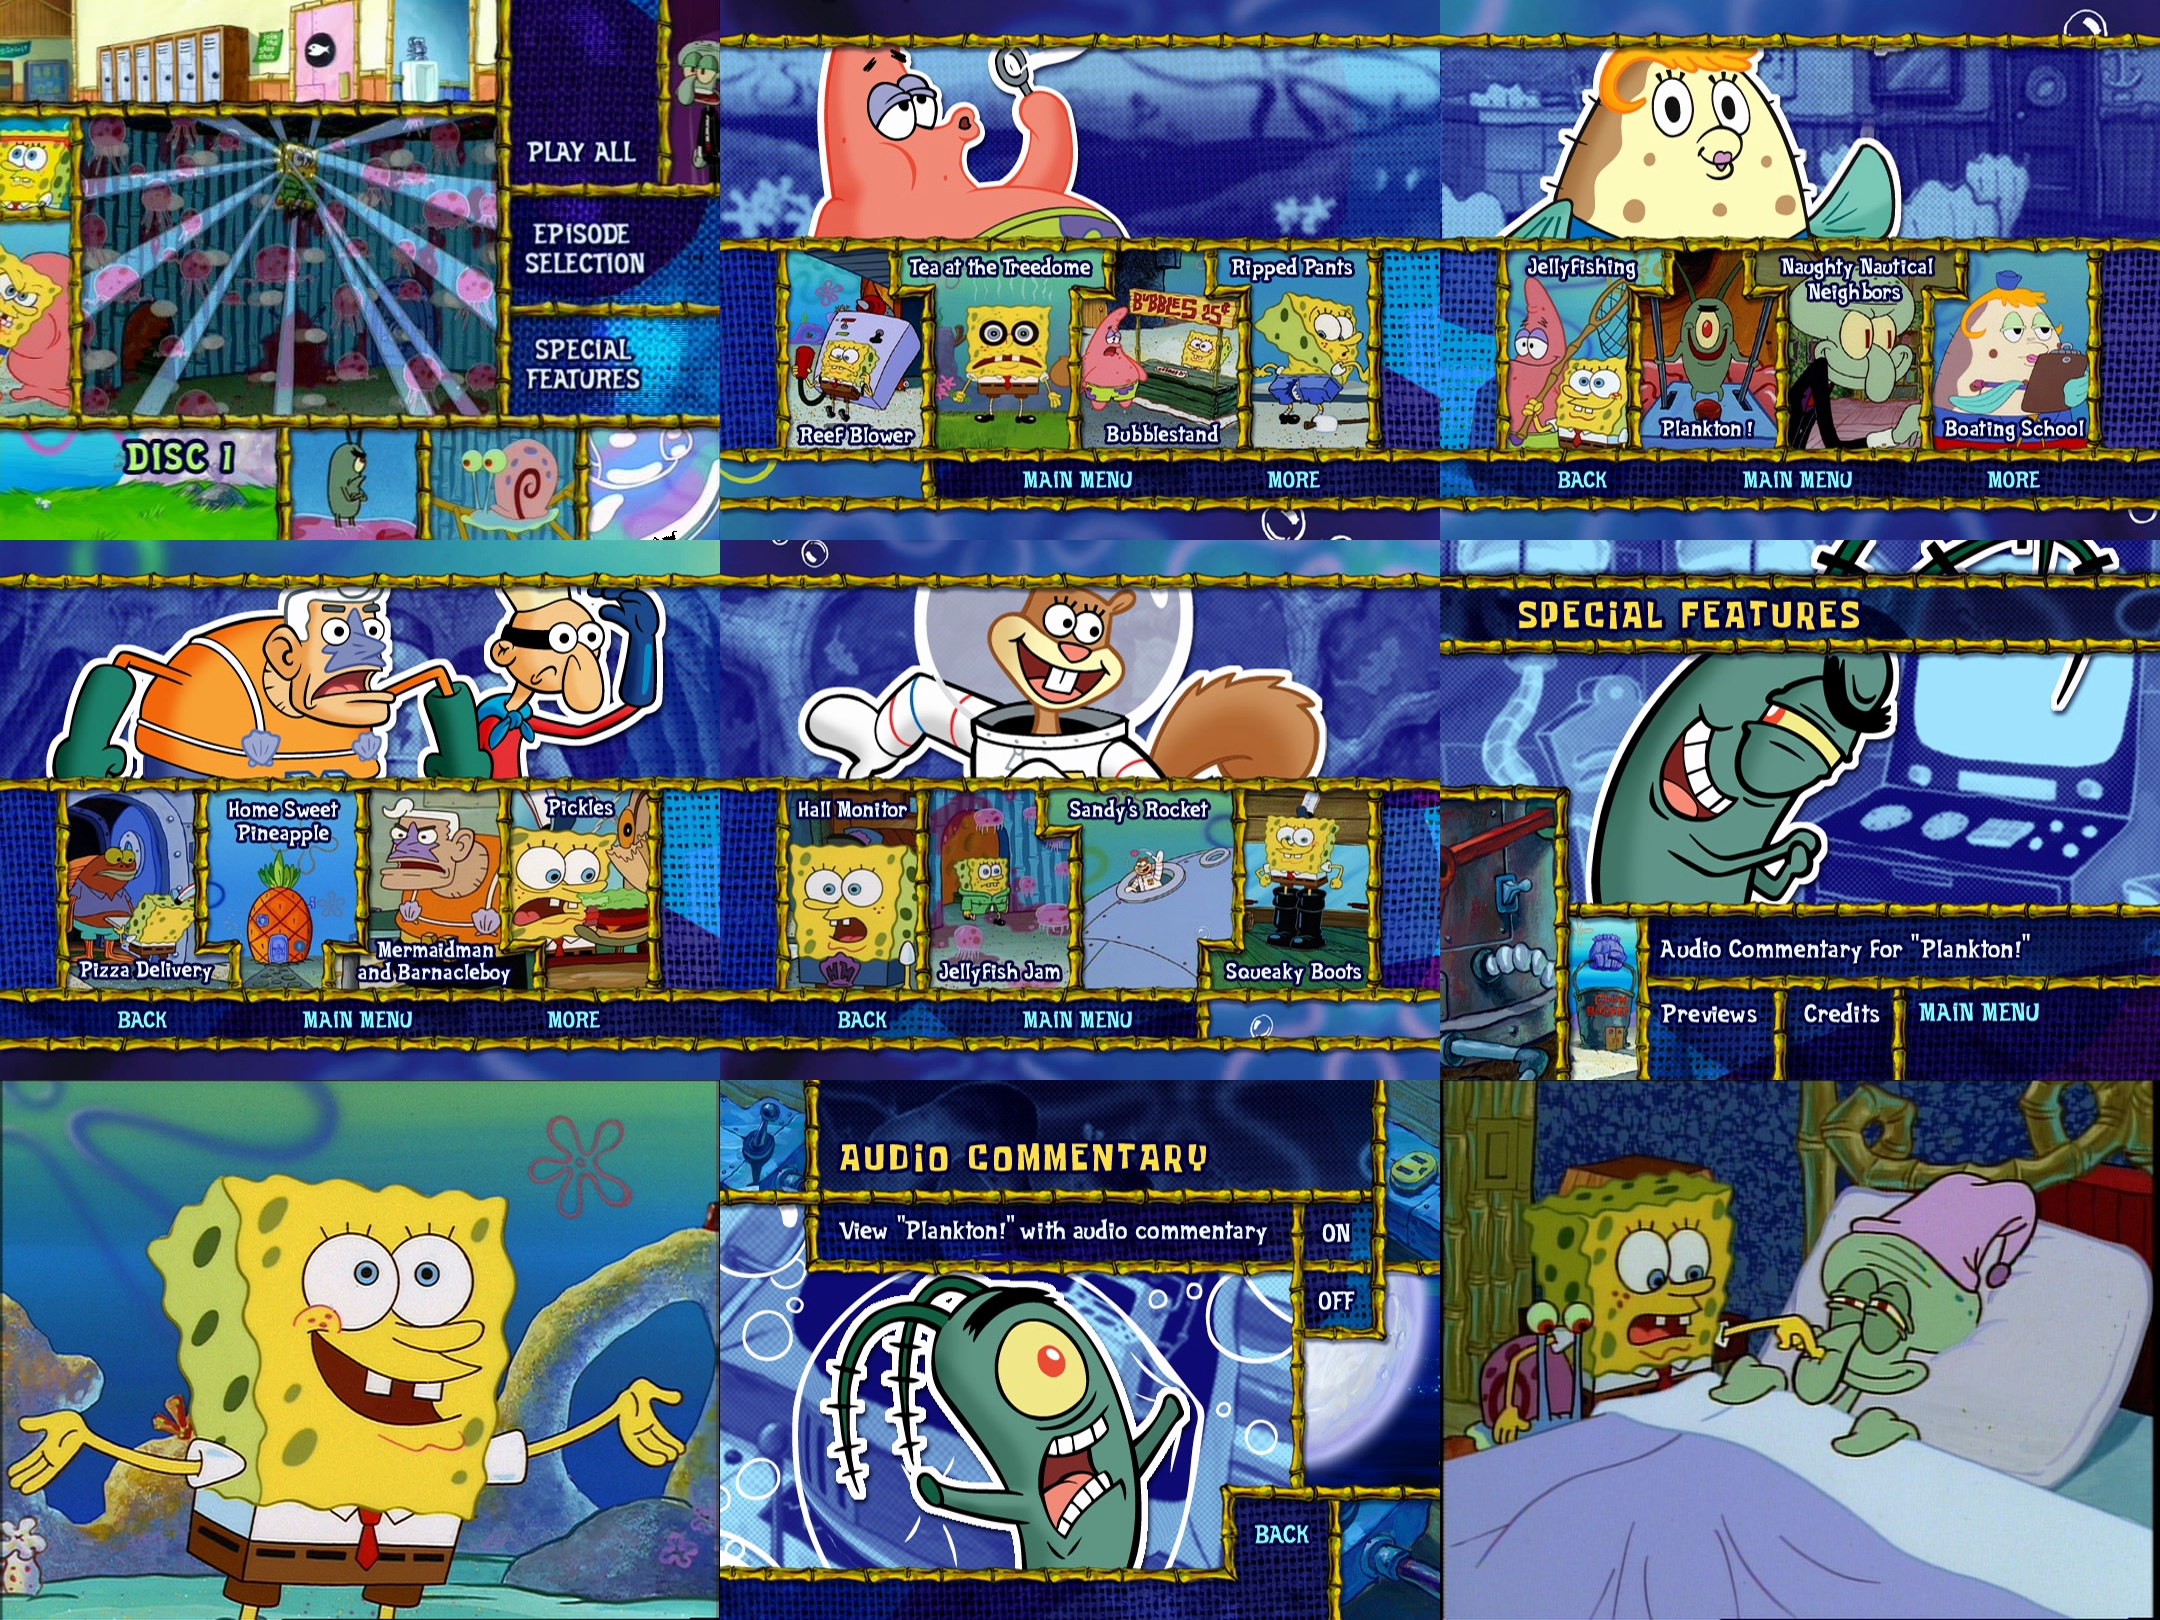 SpongeBob Season 1 DVD Menus by dakotaatokad on DeviantArt